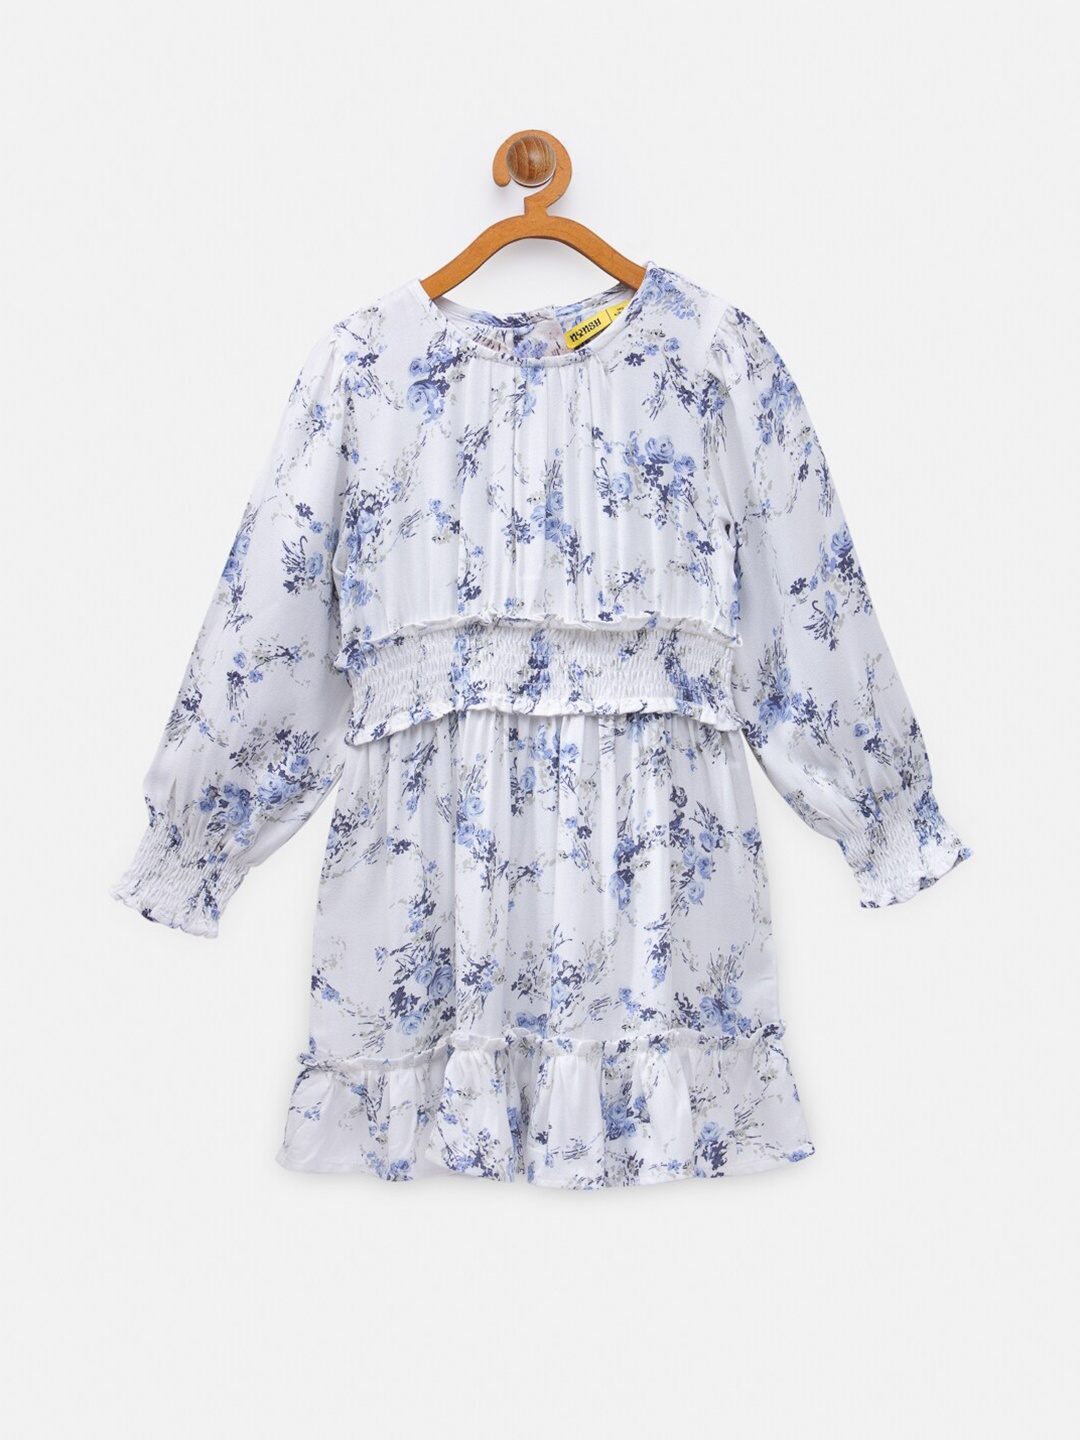 

NYNSH- PlusS Kids Girls White & Blue Floral Dress